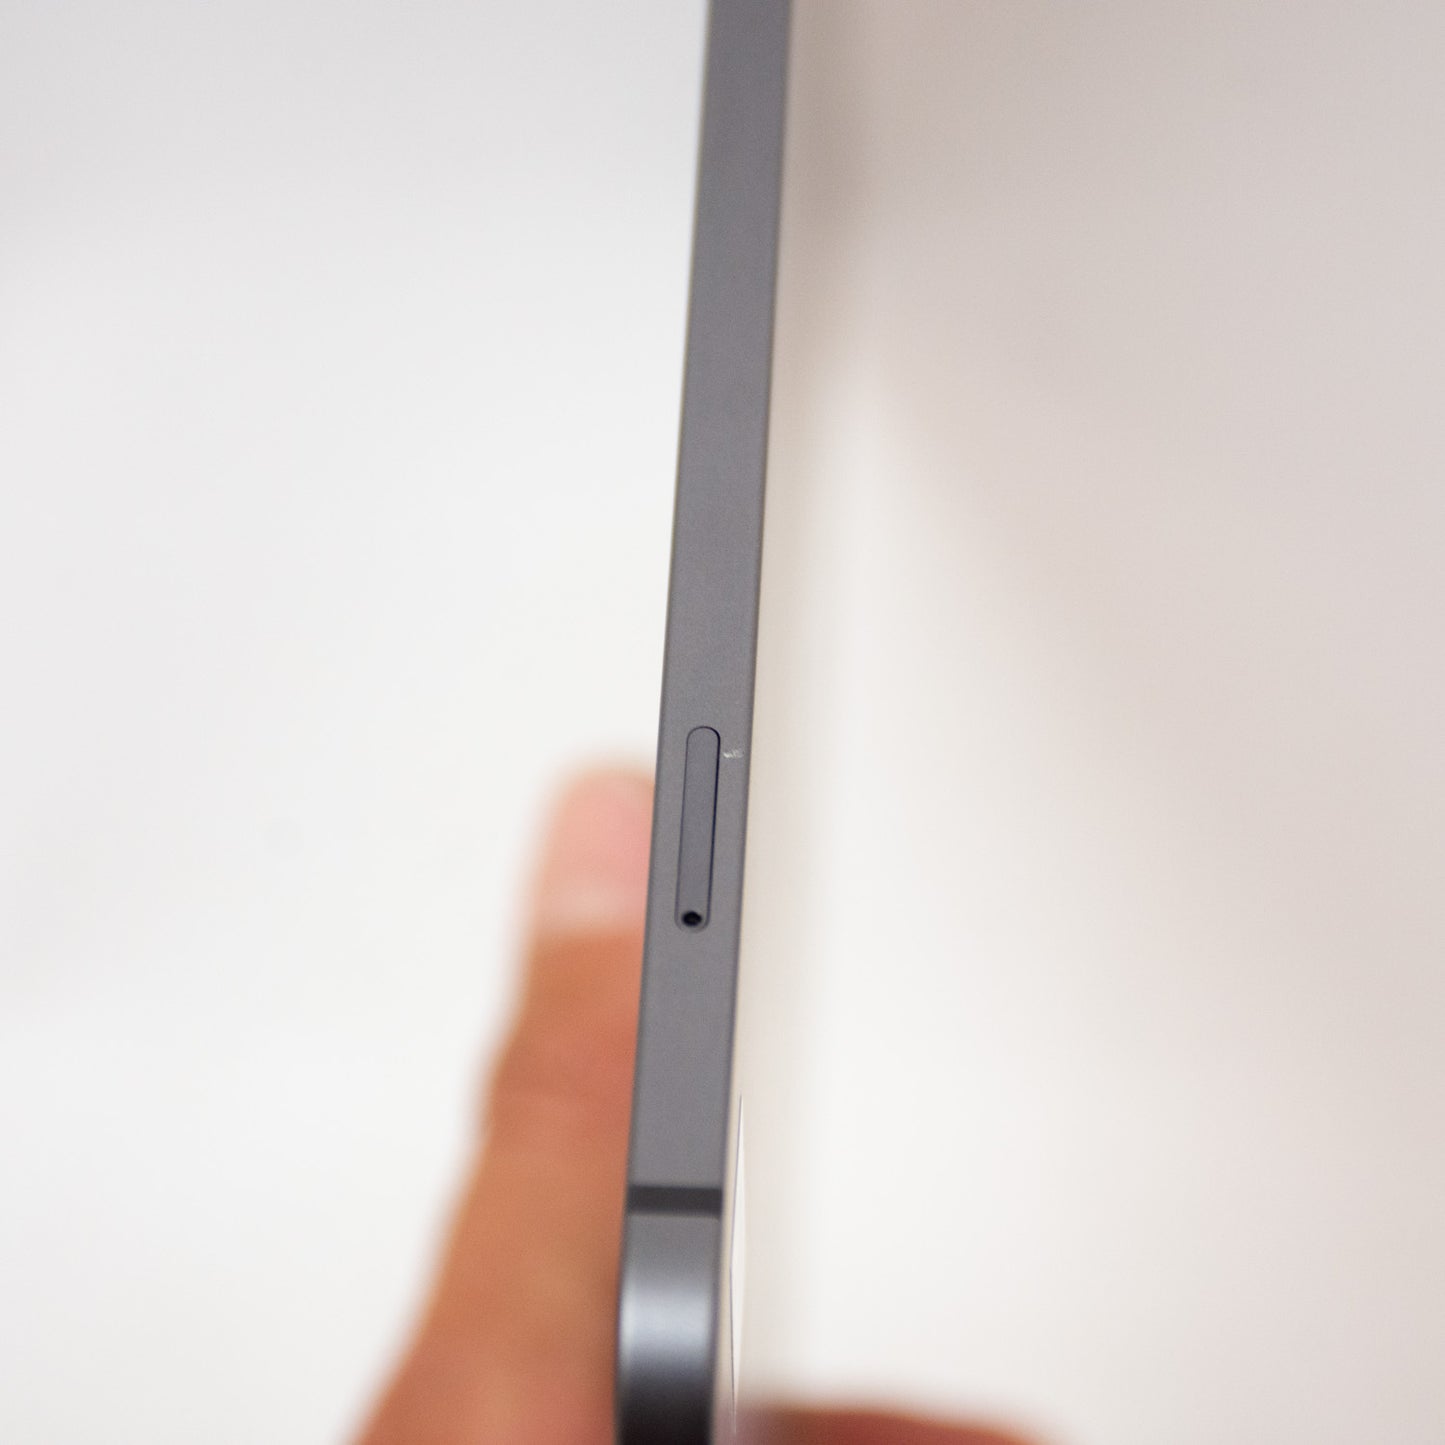 Apple iPad Pro 12.9" 4th Gen A2069 - Space Gray - 256 GB - Wifi/Cellular